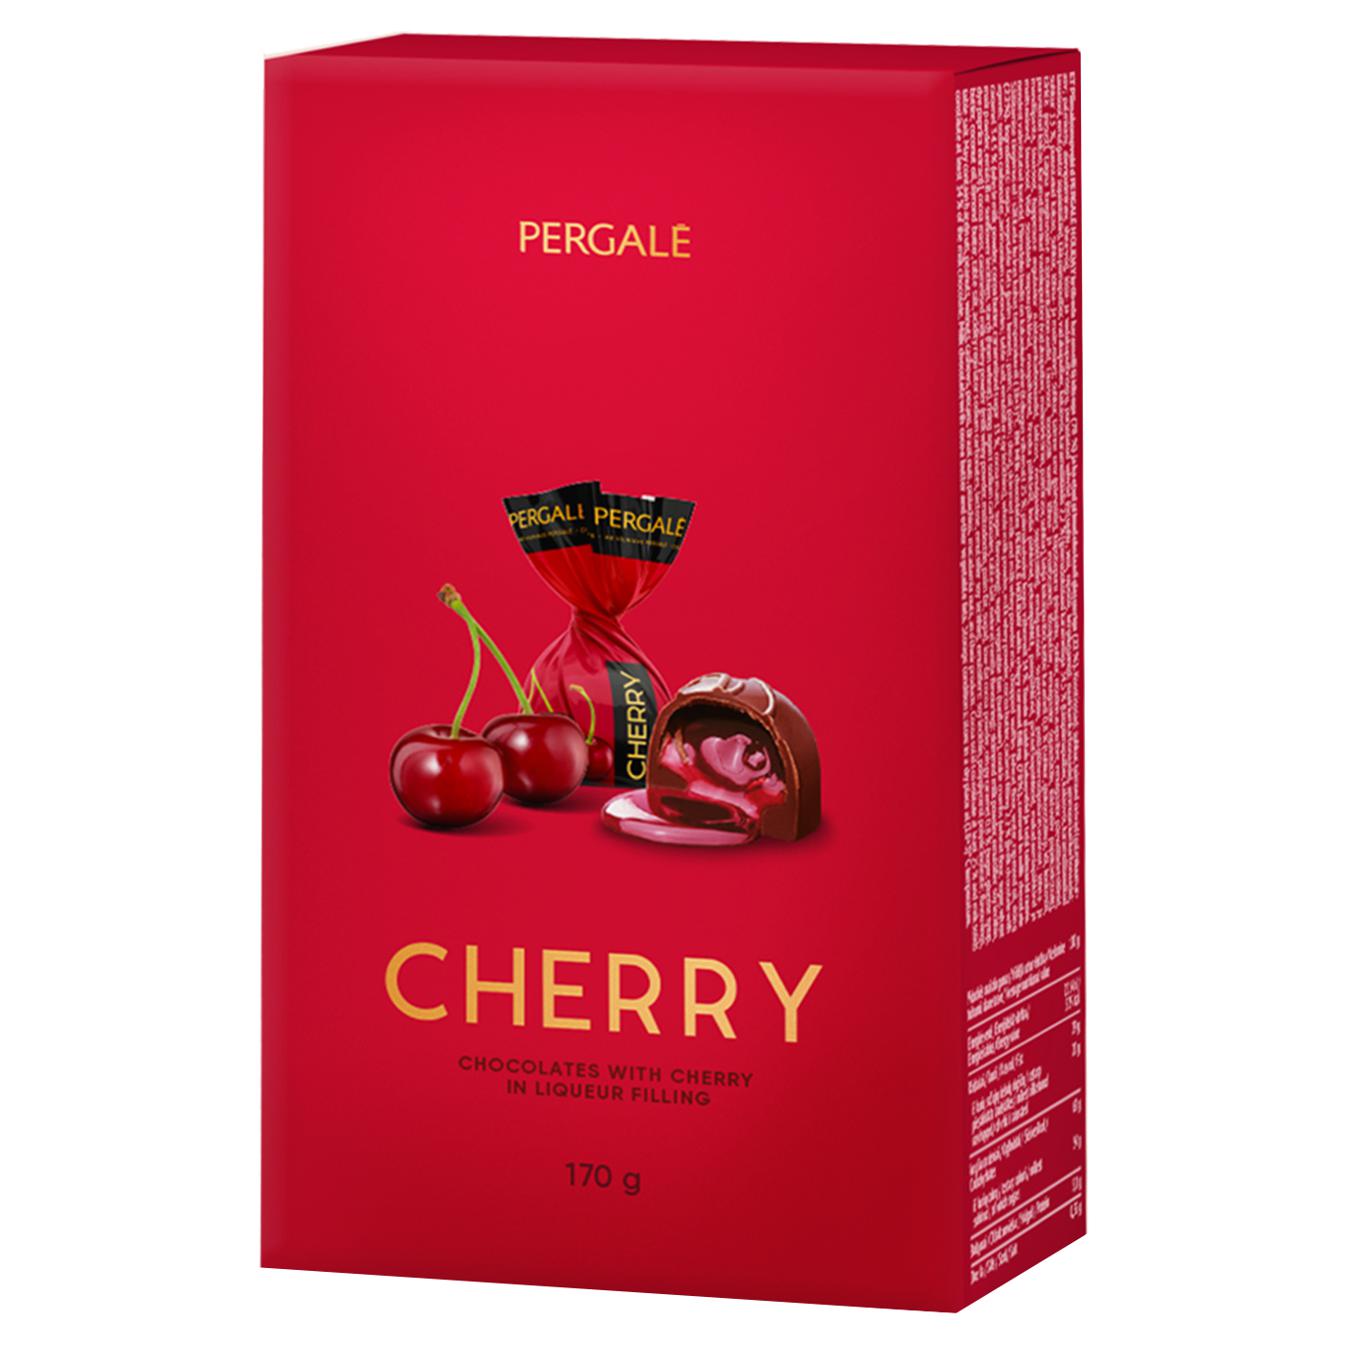 Pergale cherry candies 170g